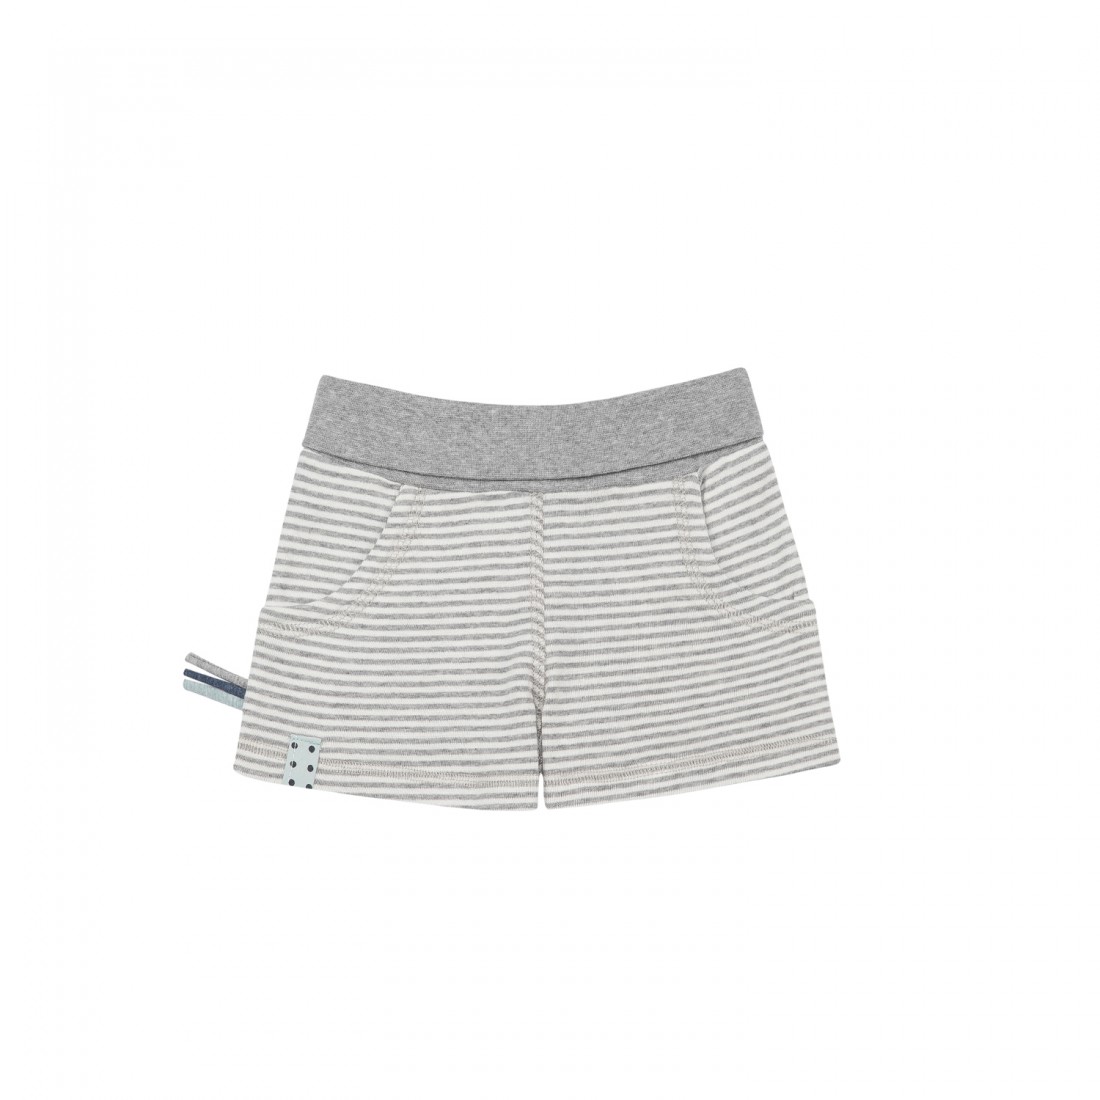 OrganicEra Organic Shorts, Grey Striped